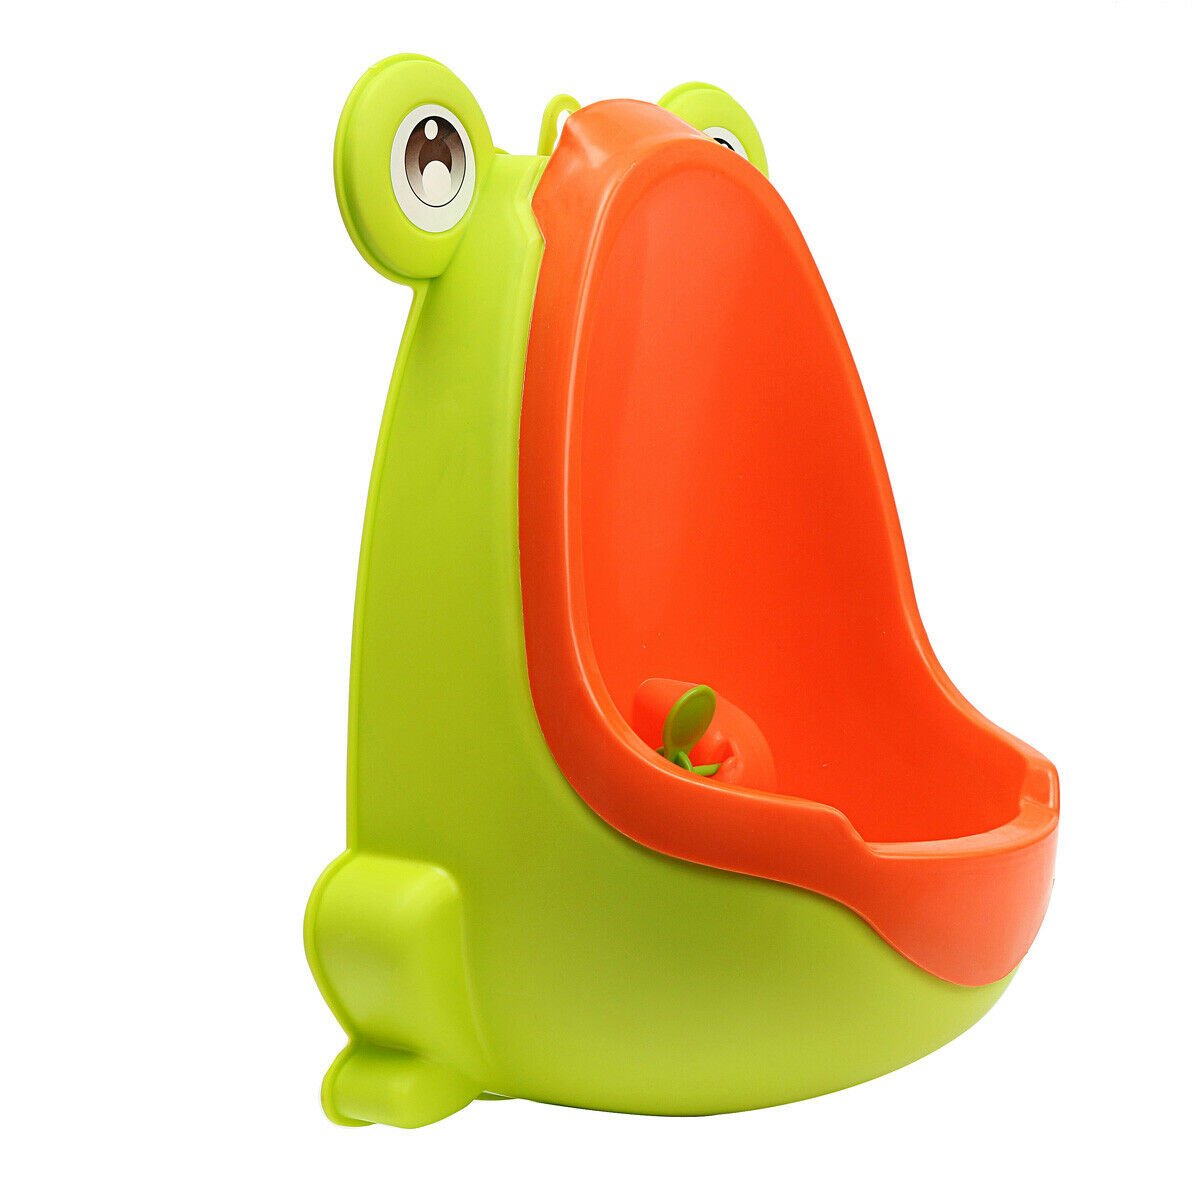 Fashion Frog Boy Baby Toilet Training Children Kids Potty Urinal Pee